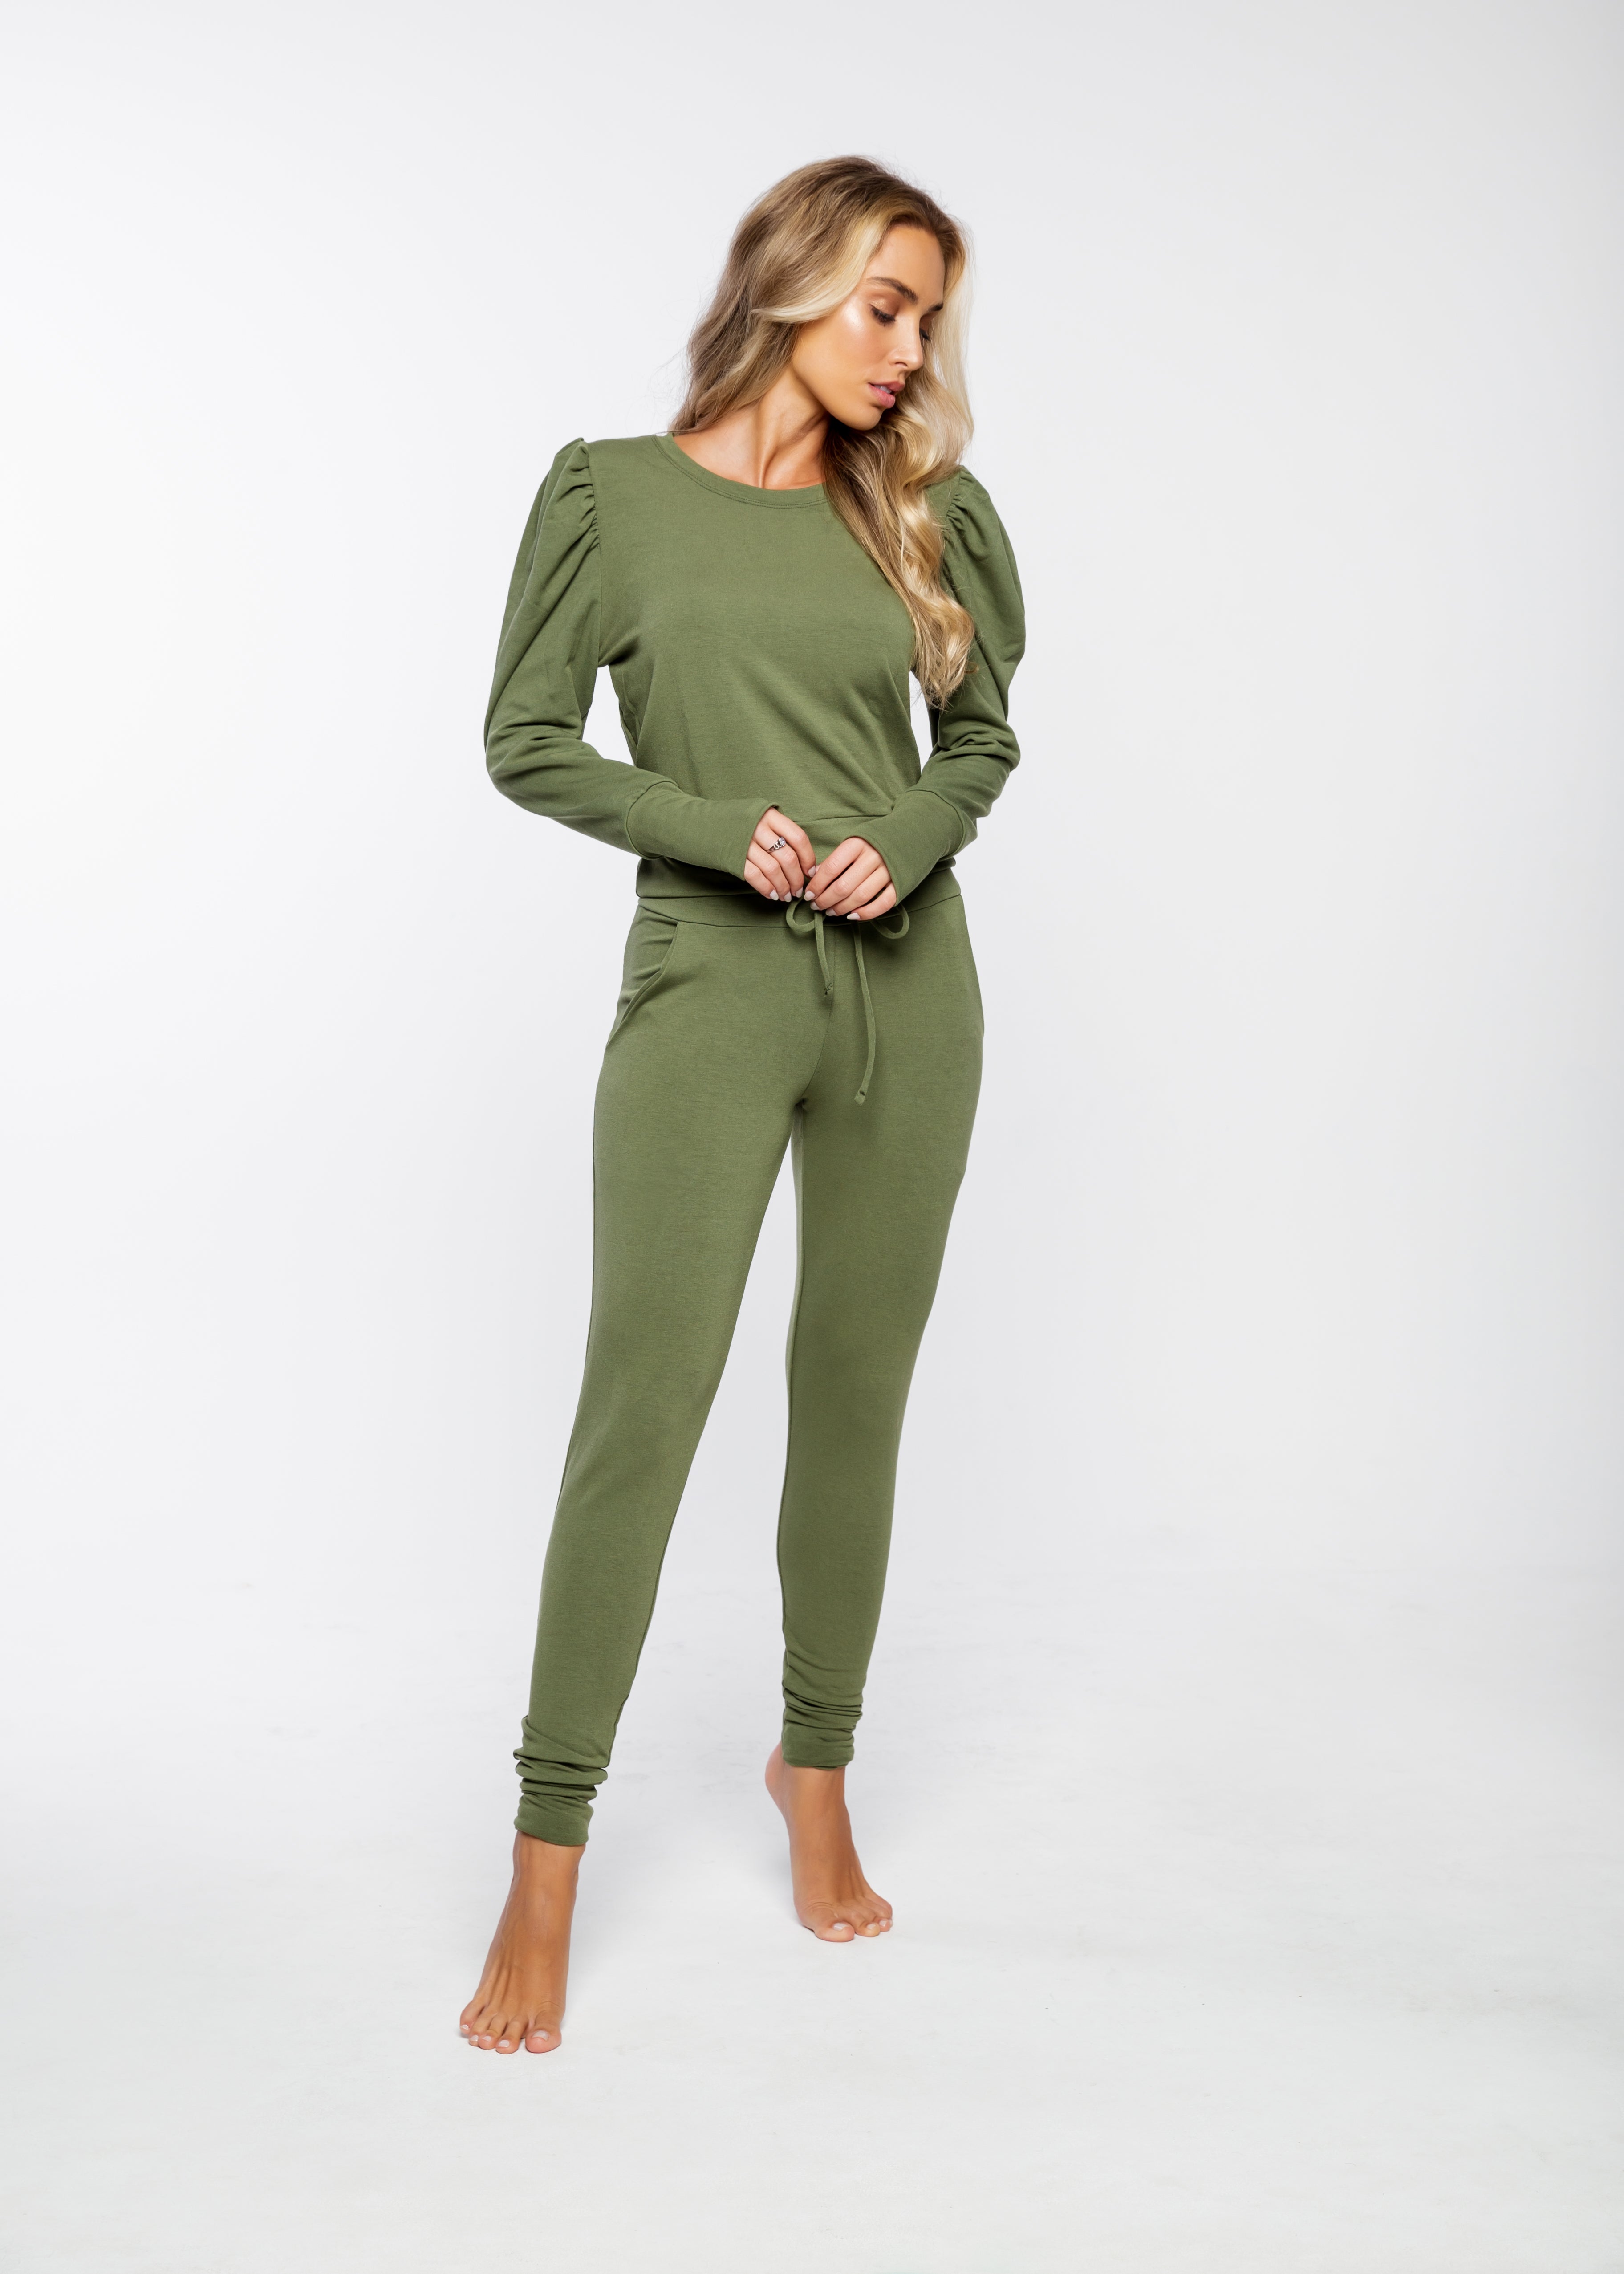 green militar sweatshirt, female model